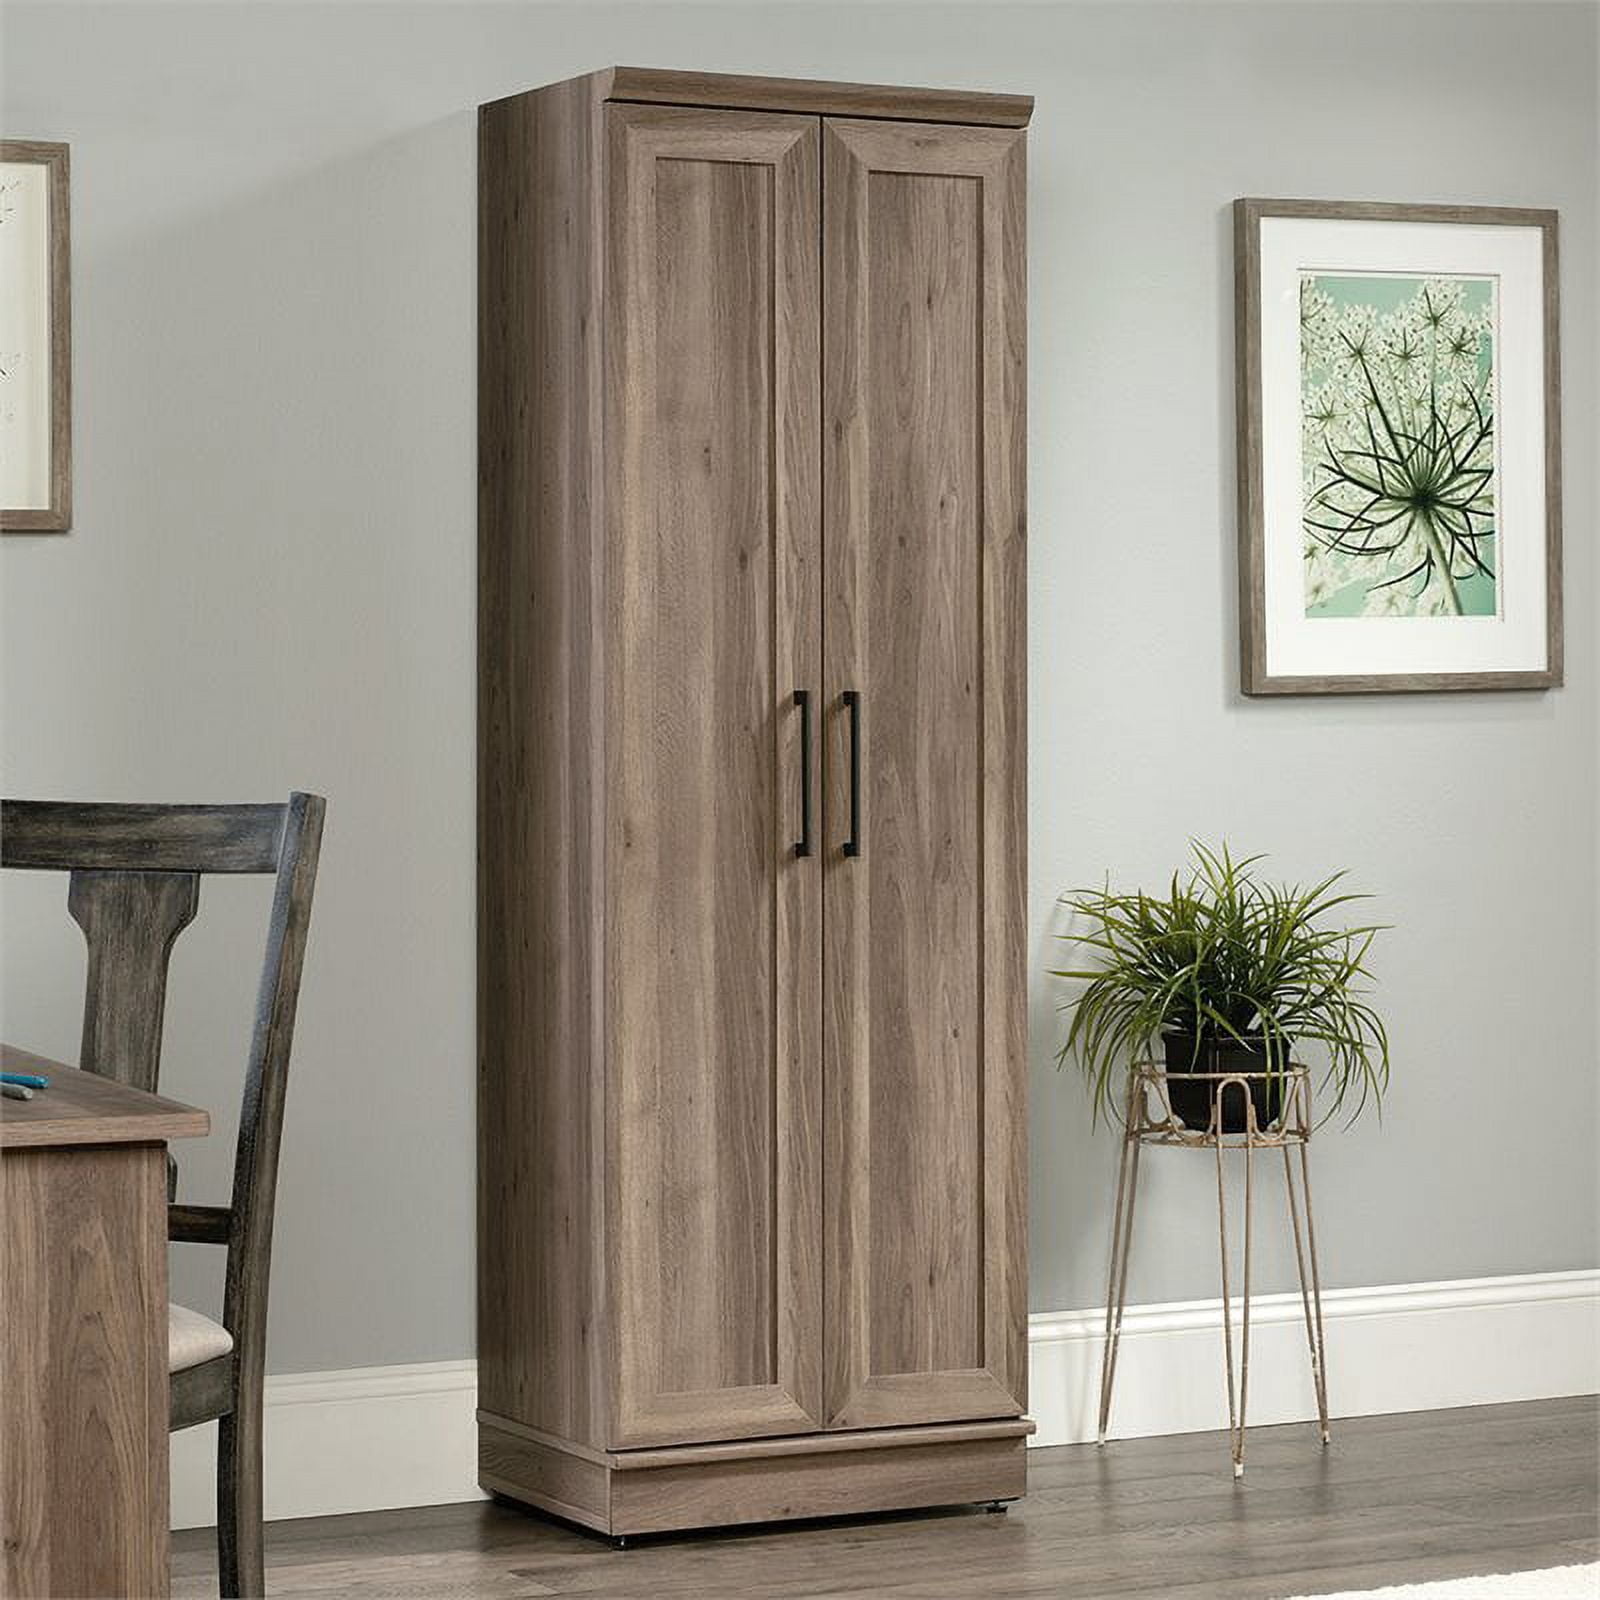 Sauder® HomePlus Lintel Oak® Storage Cabinet